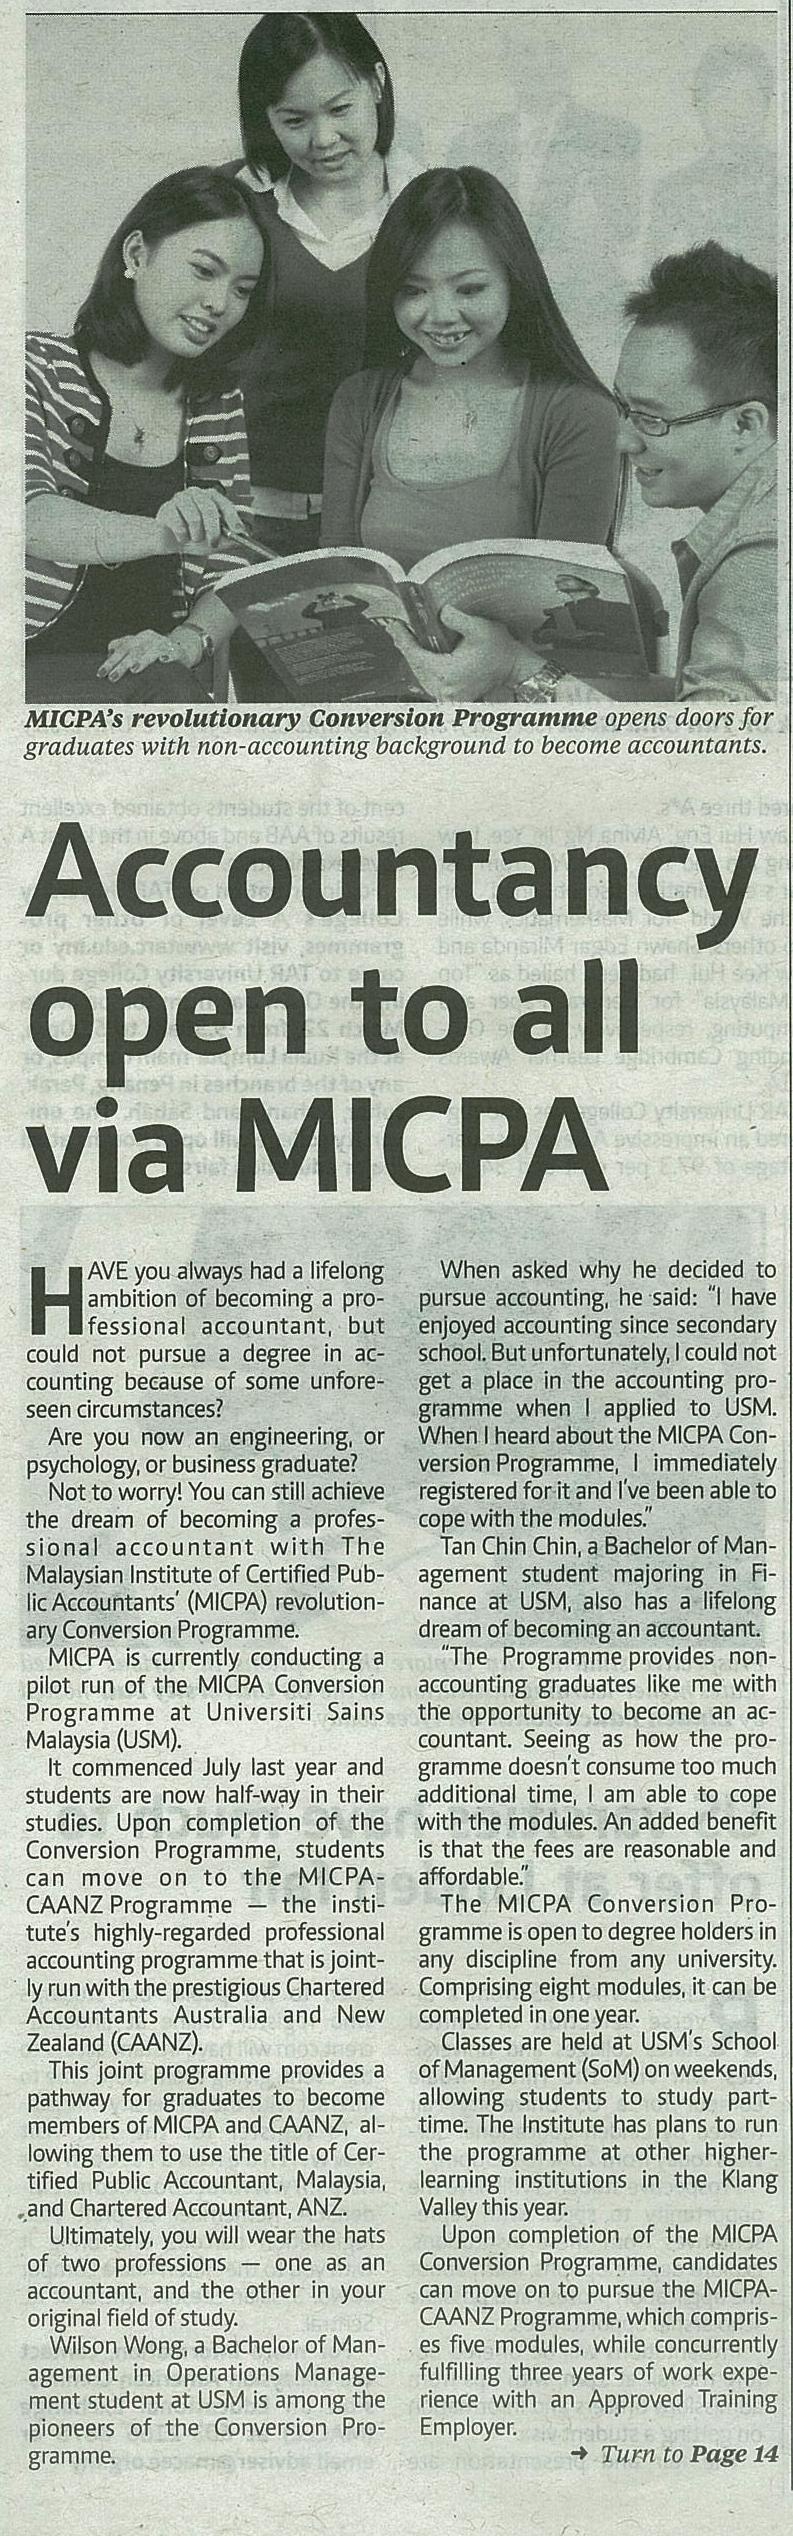 1 Mac 2015 Accountancy open to all via MICPA NSUNT